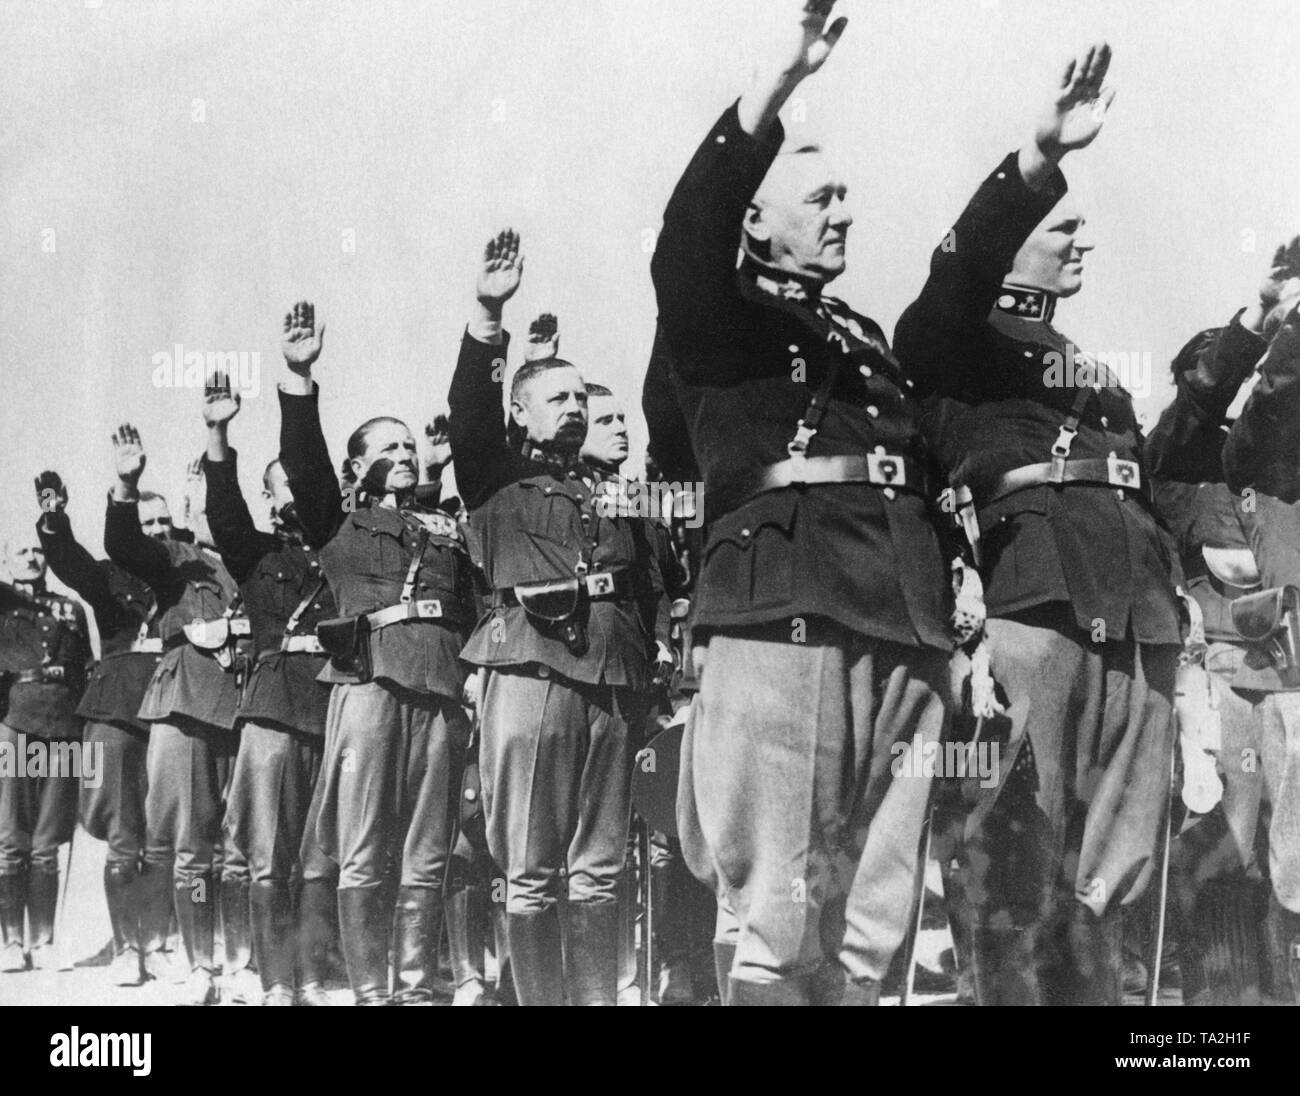 The Austrian Landespolizei is sworn in by the Reichsfuehrer SS Heinrich Himmler. After the annexation of Austria to the German Reich, the Austrian police is sworn in to Adolf Hitler. Stock Photo